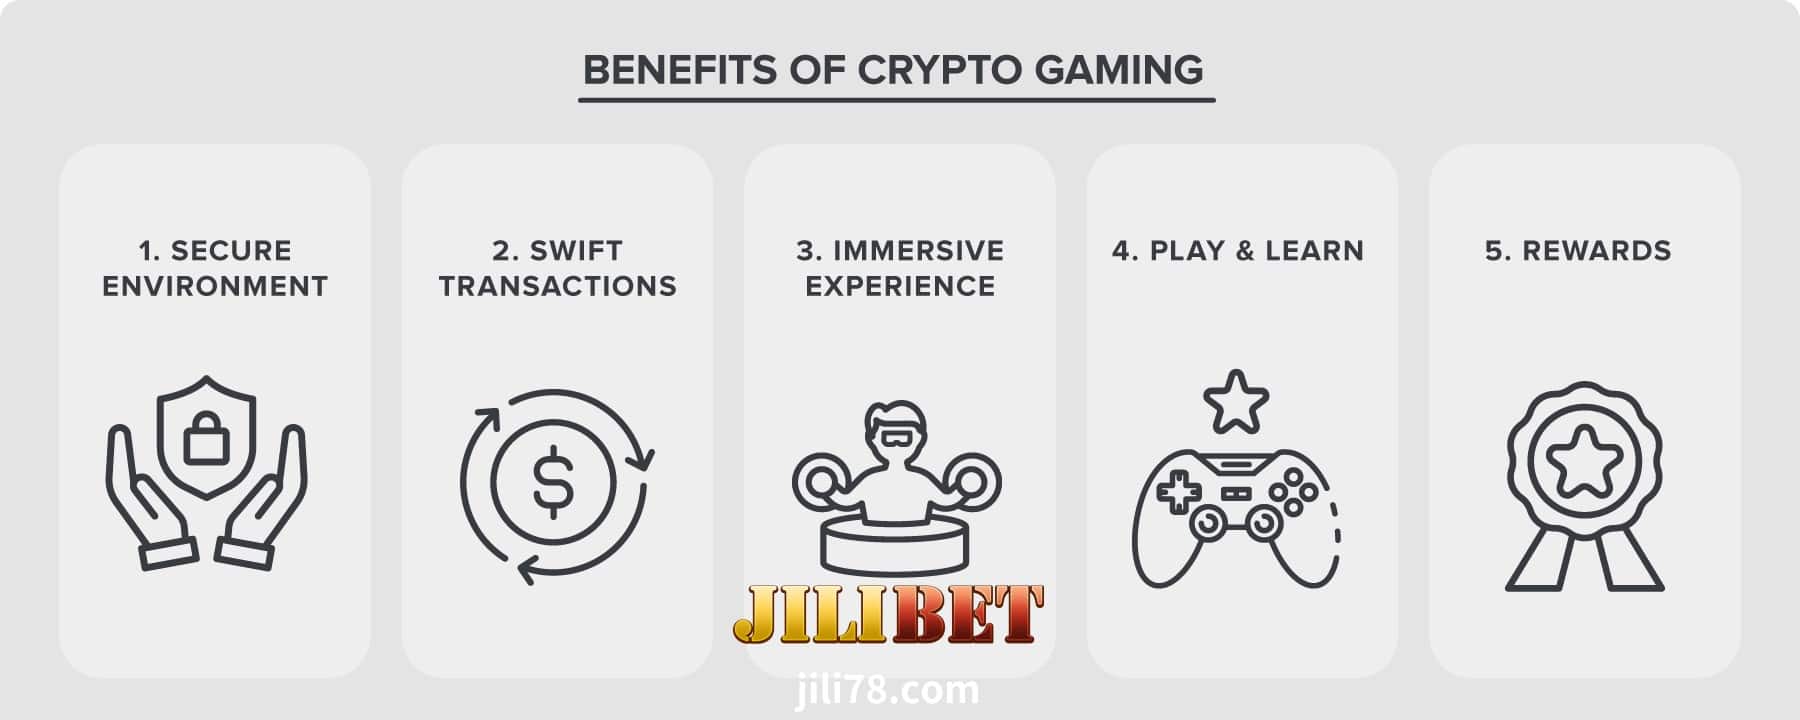 JILIBET Online-Casino1